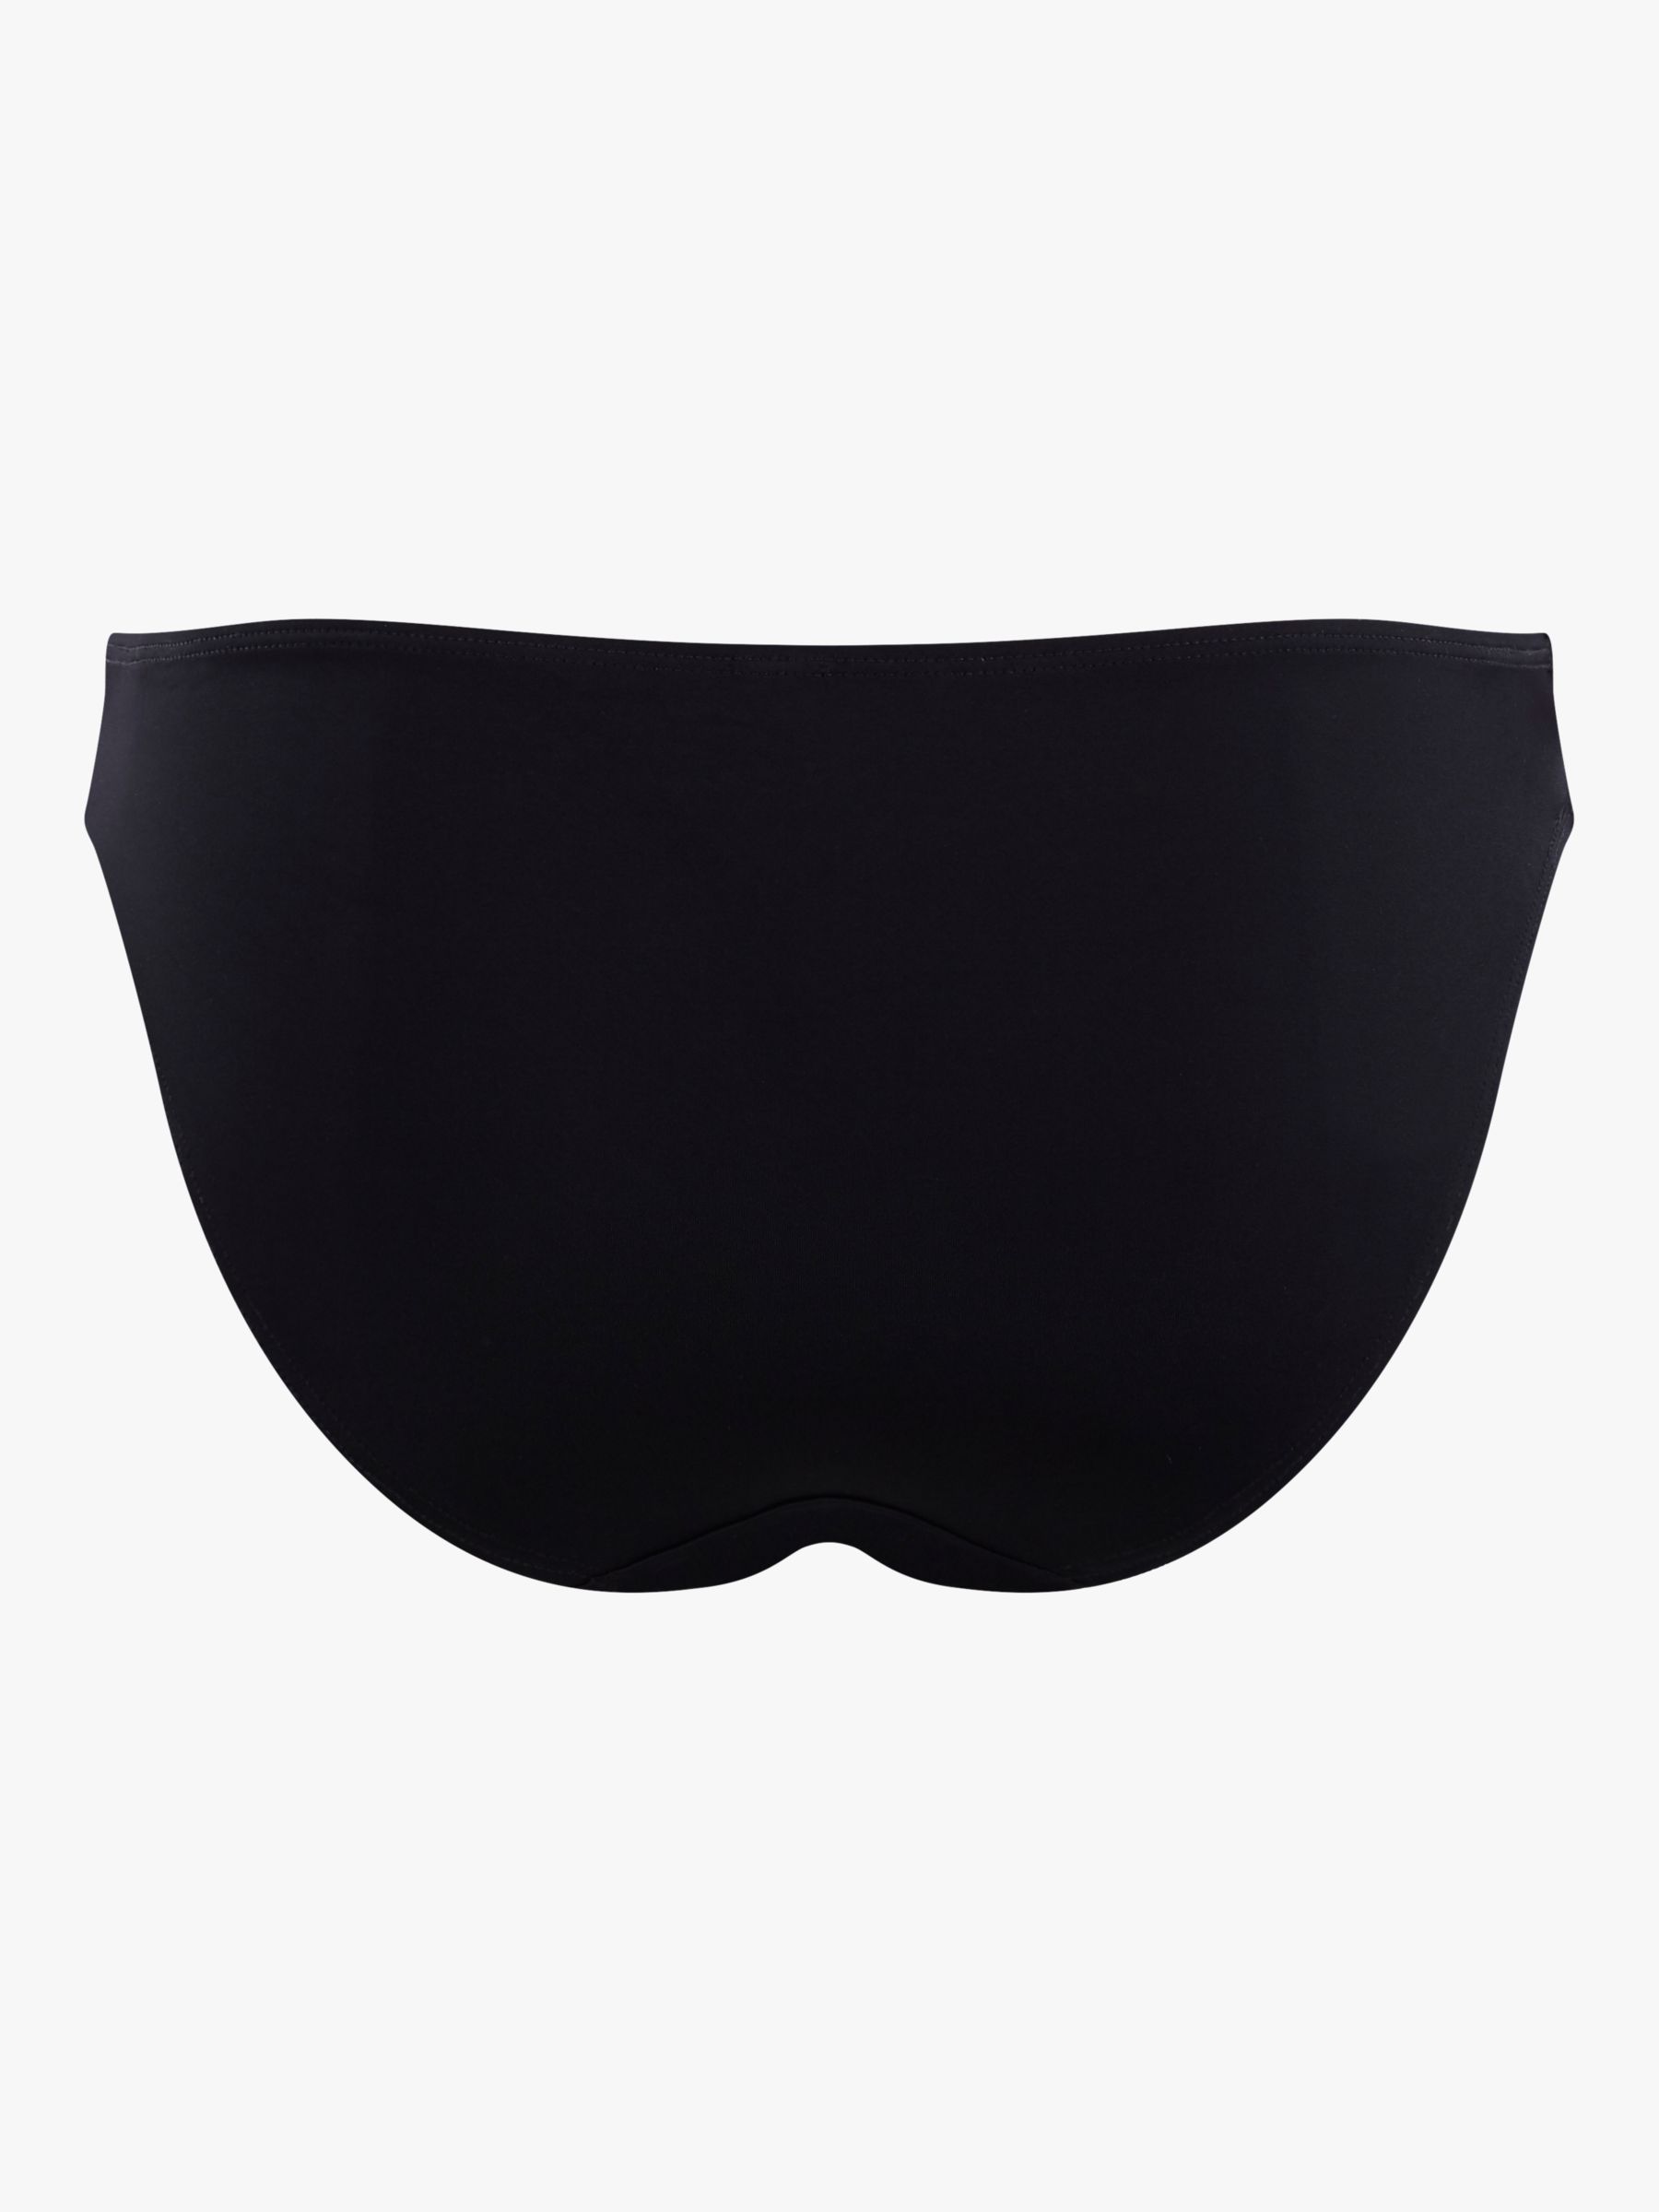 Panache Anya Riva Classic Bikini Bottoms, Black, 8